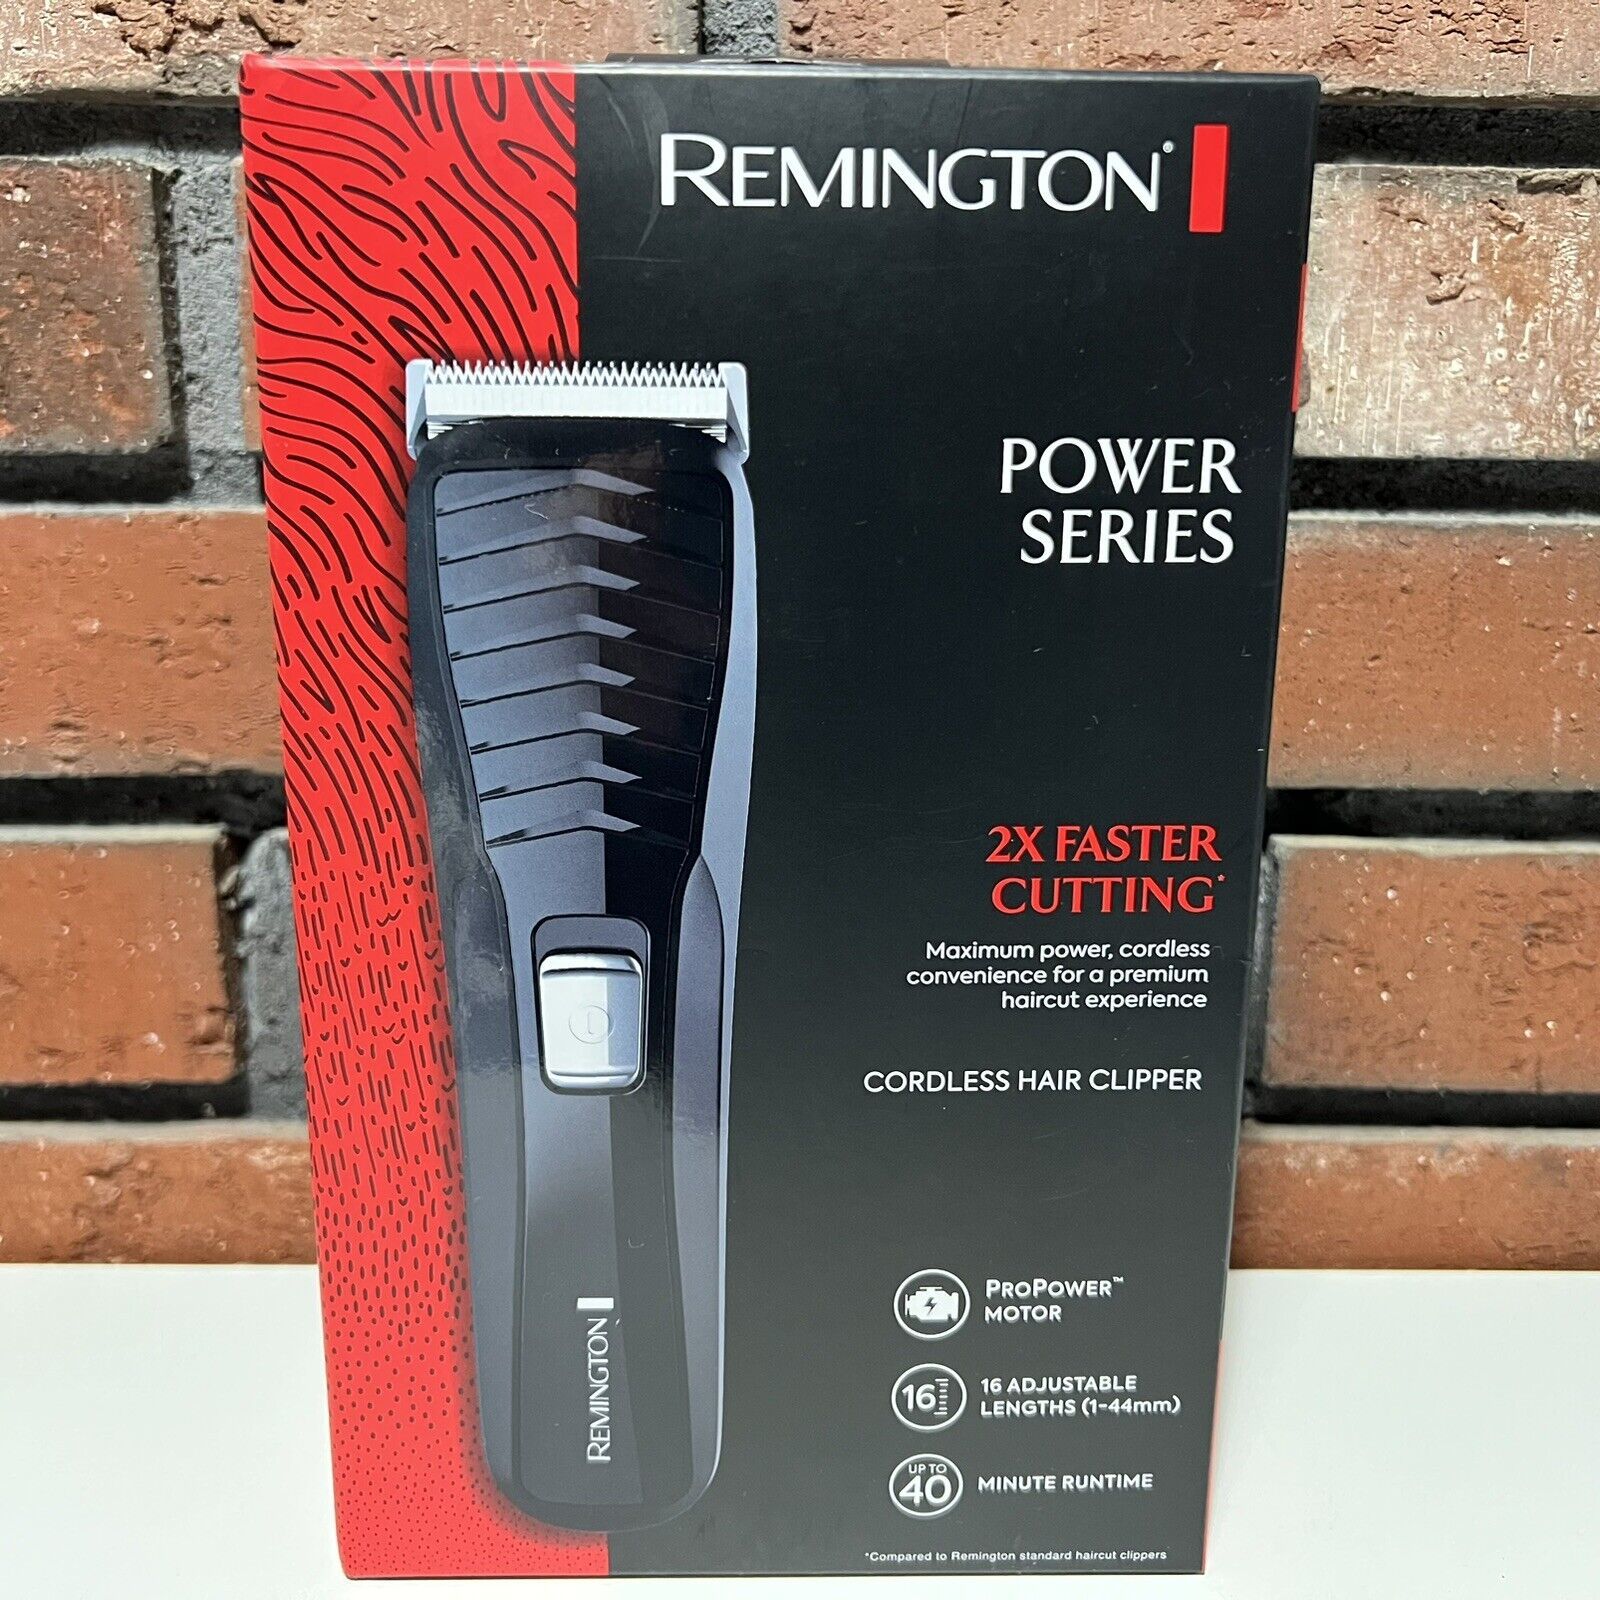 Remington Cordless Power Series Haircut & Beard Trimmer 4000 New in Box - $23.76